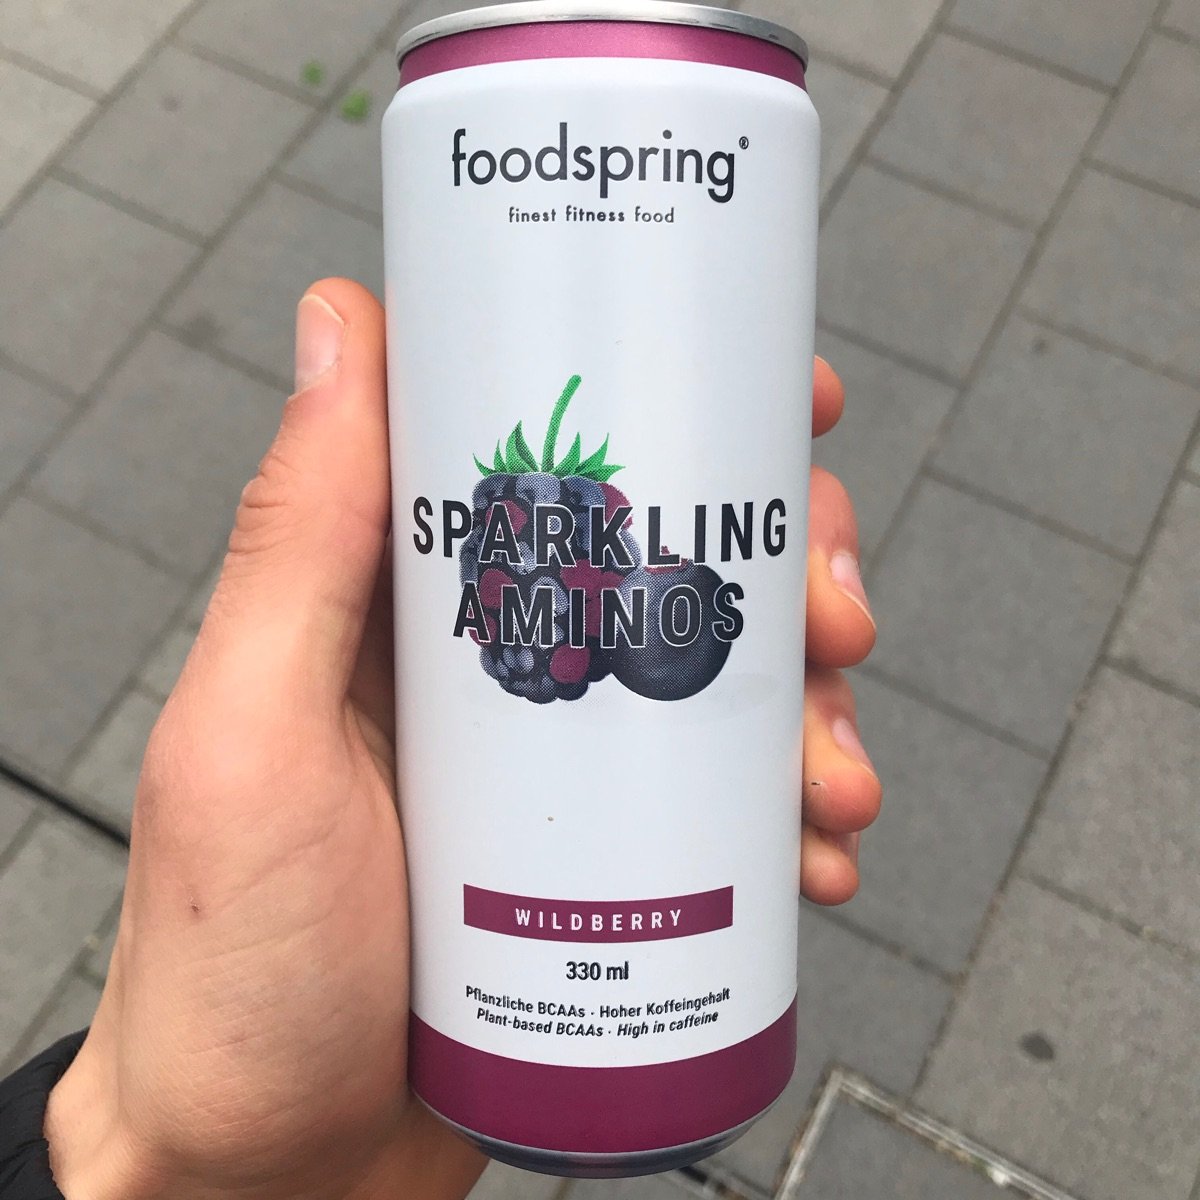 Foodspring Sparkling Aminos Wildberry Reviews